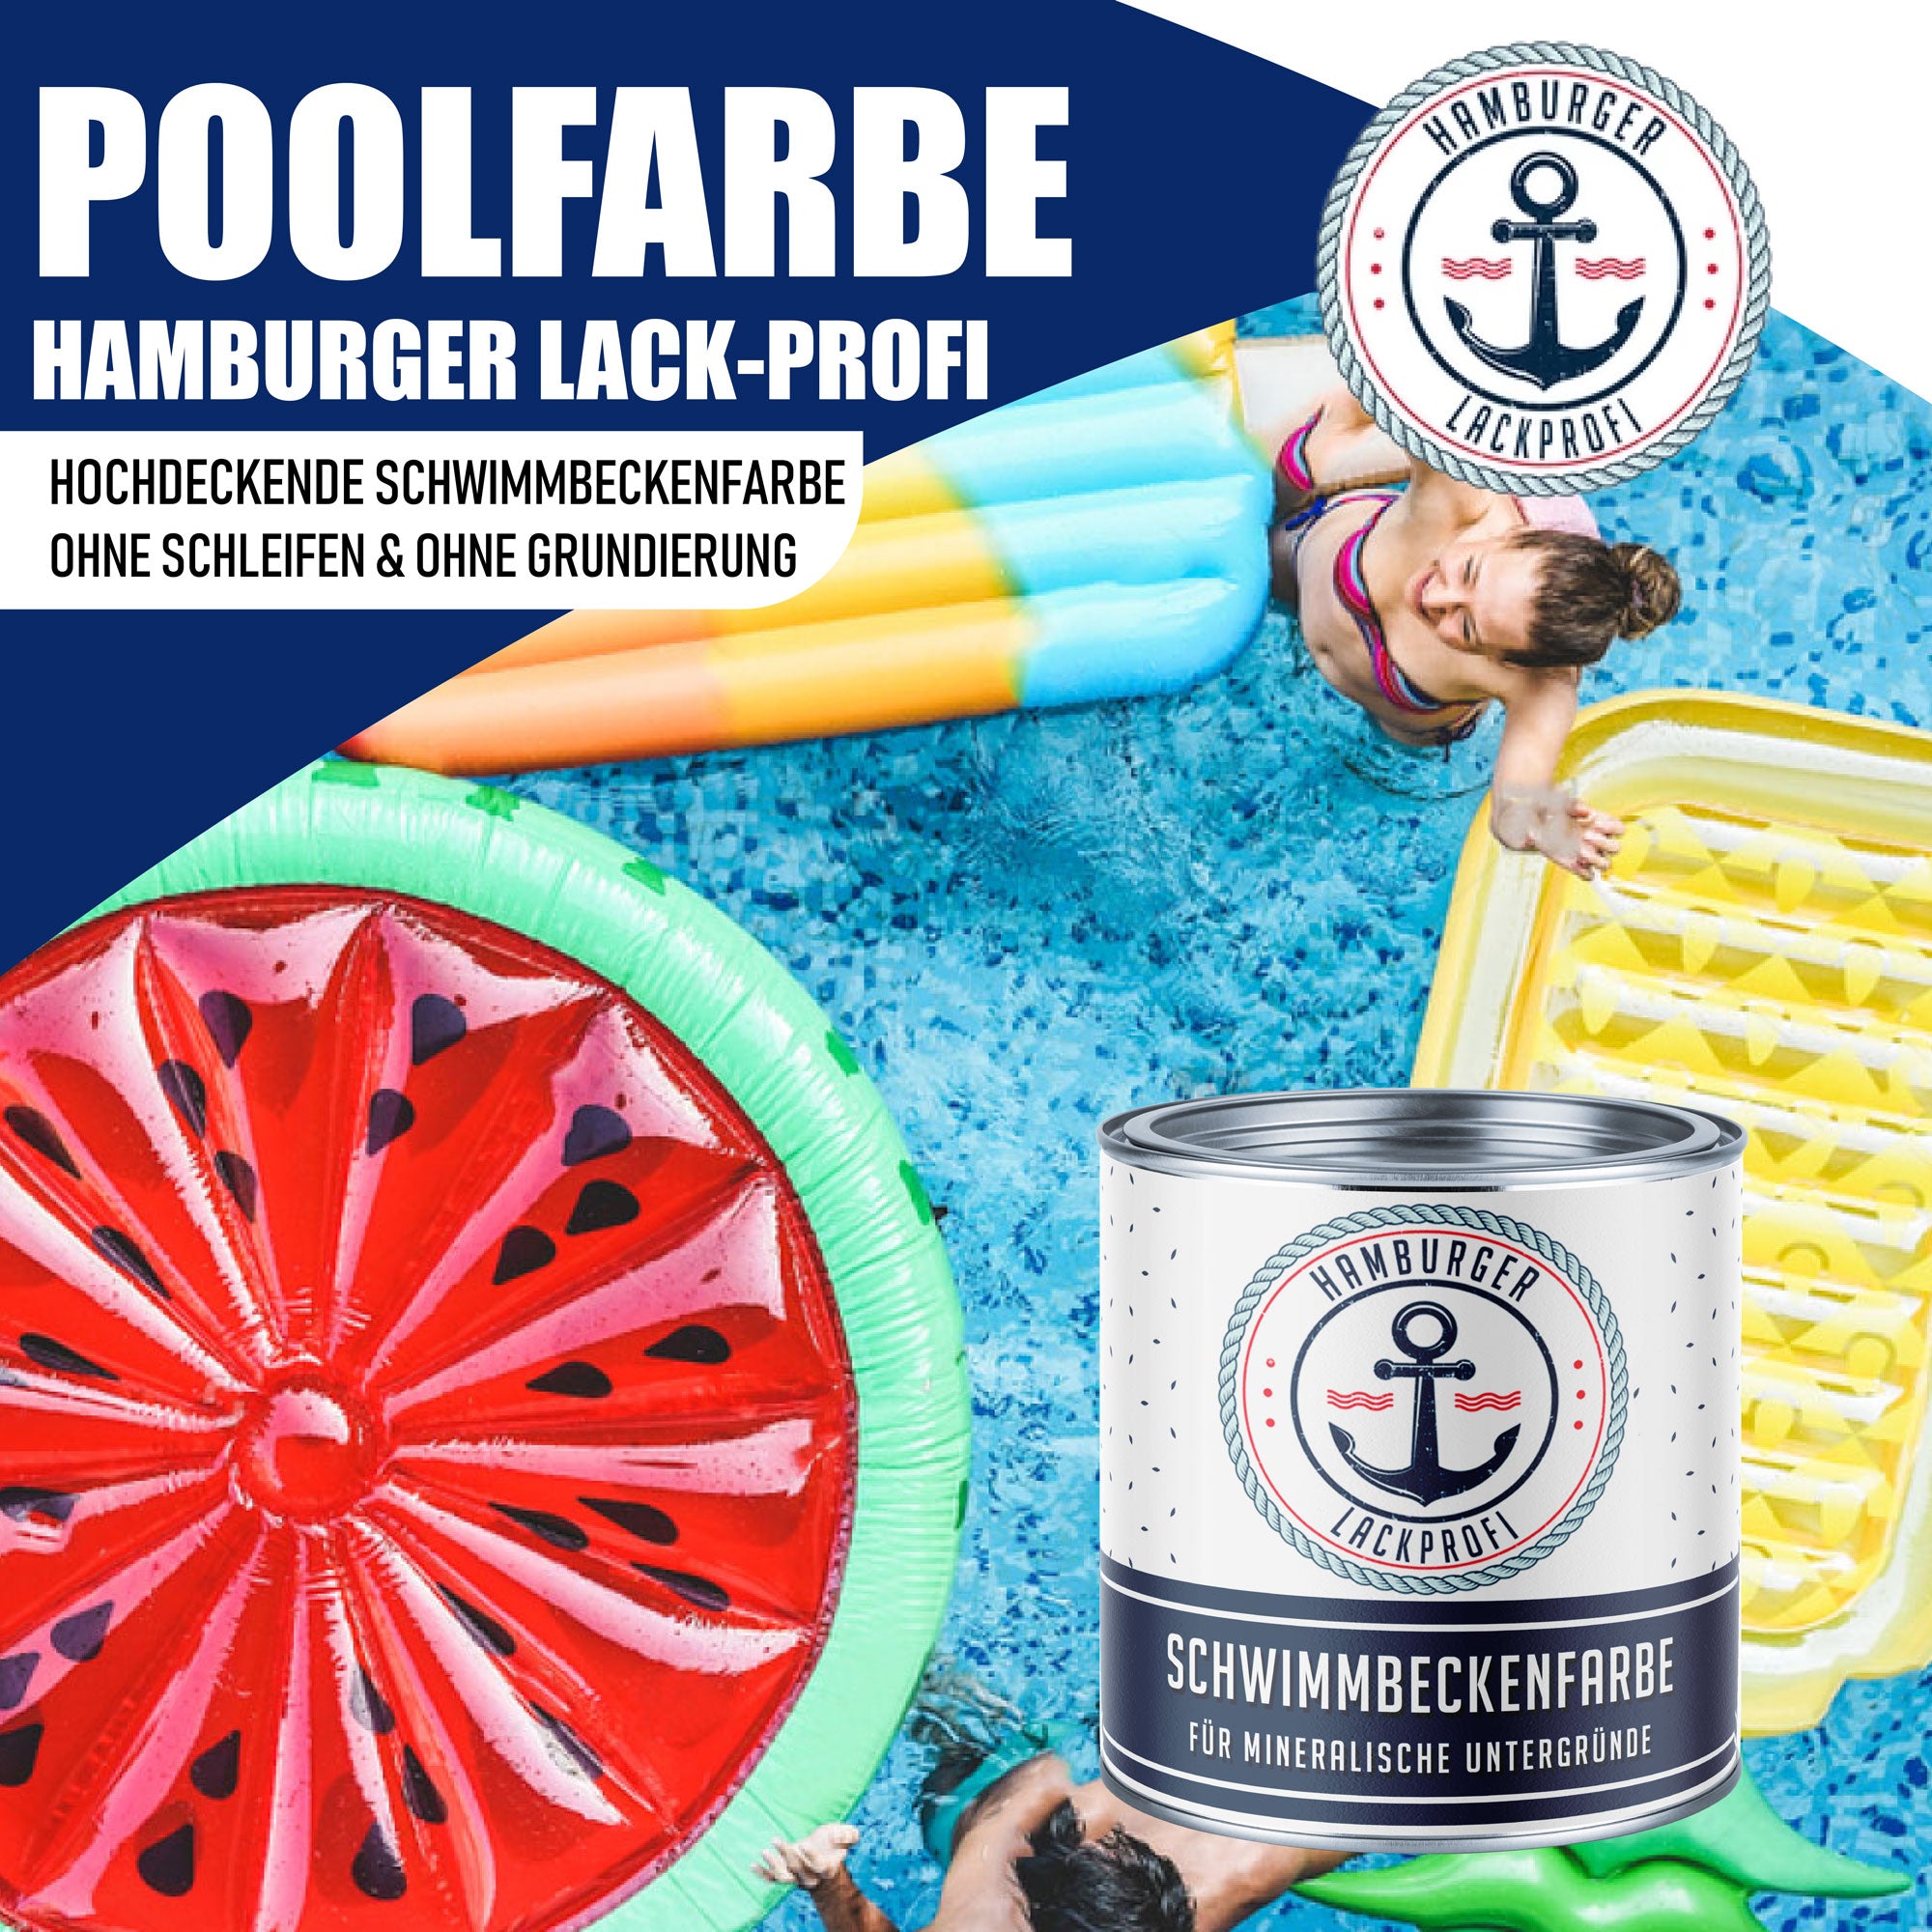 Hamburger Lack-Profi Schwimmbeckenfarbe Telegrau 1 RAL 7045 - hochdeckende Poolfarbe